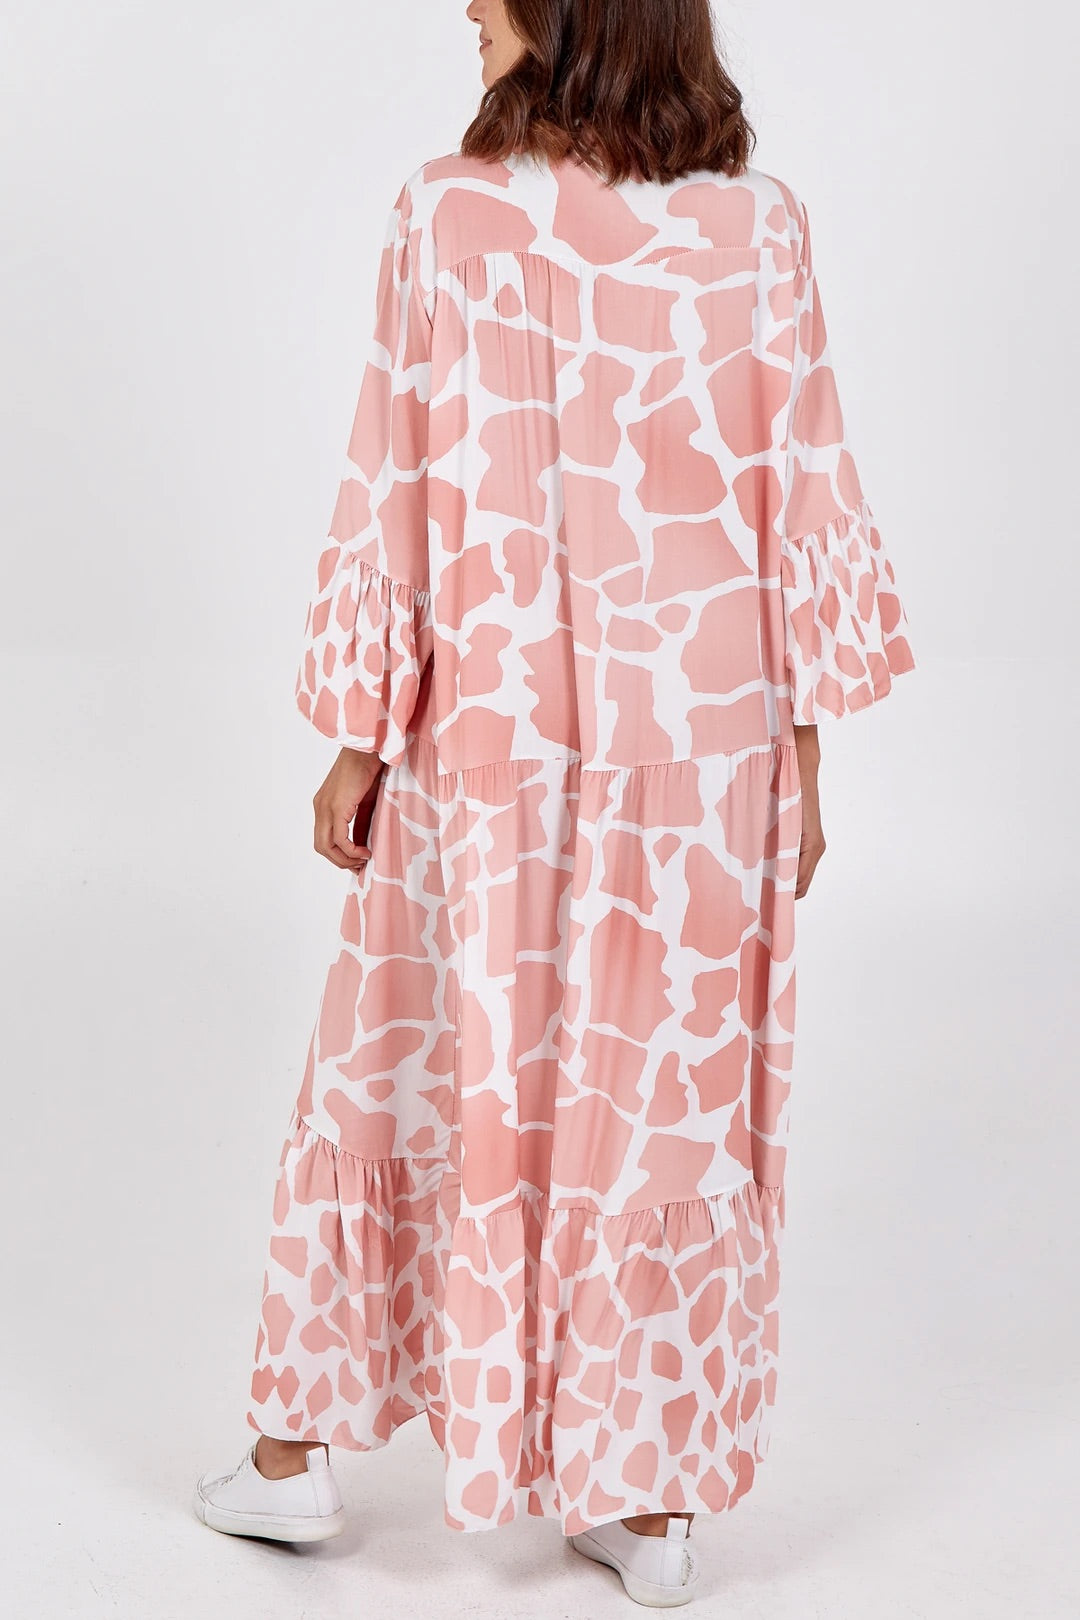 KENNEDI - Abstract Print Tiered Maxi Dress - Italian Made